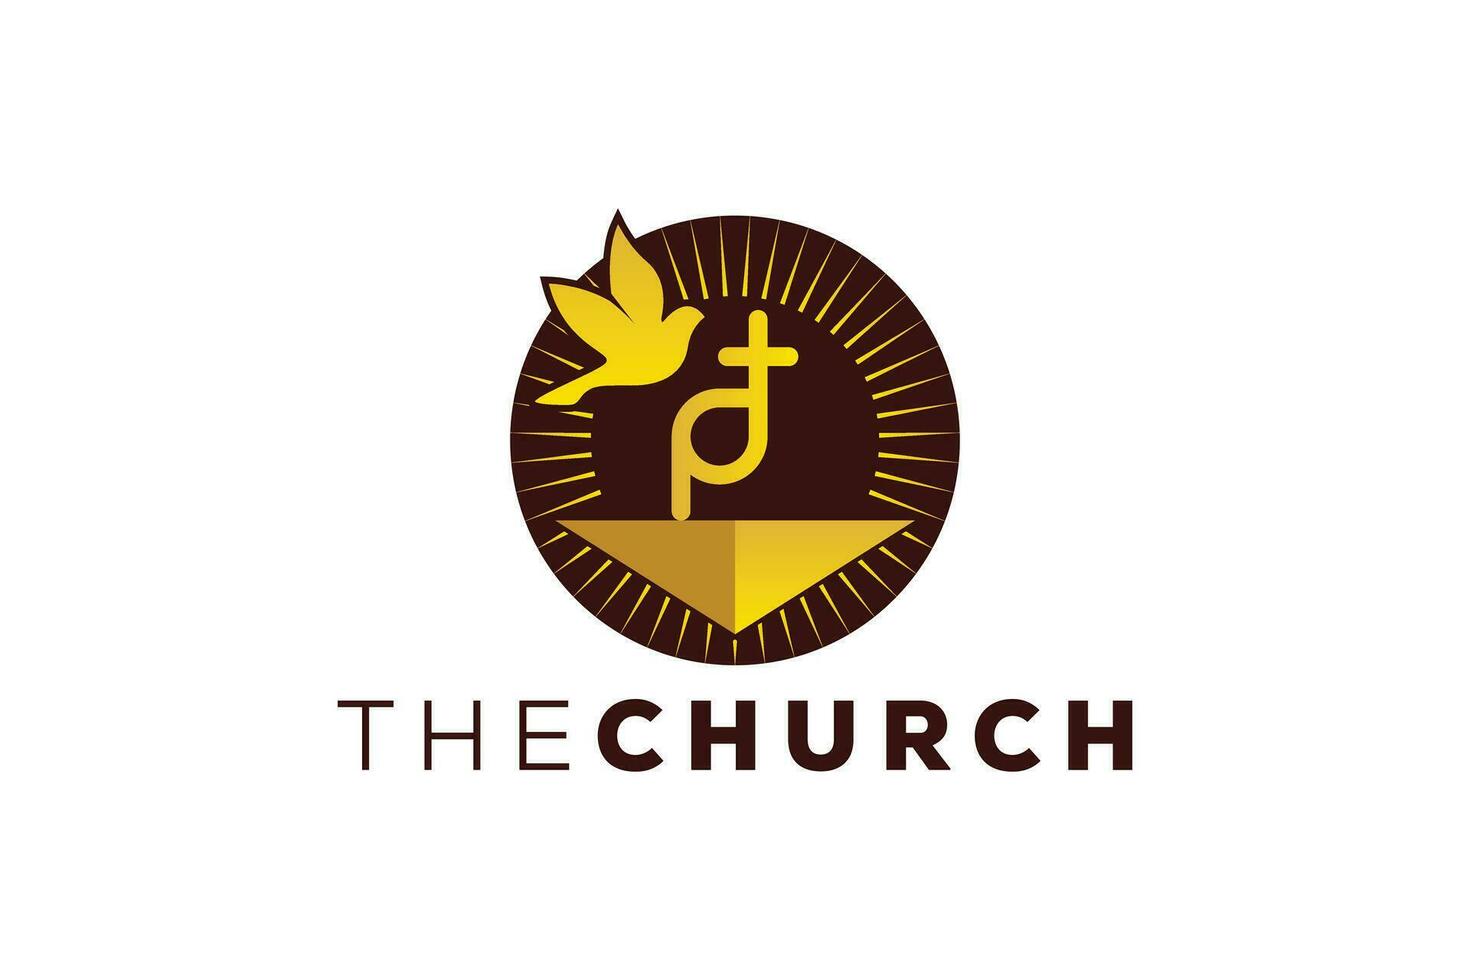 de moda y profesional letra pags Iglesia firmar cristiano y pacífico vector logo